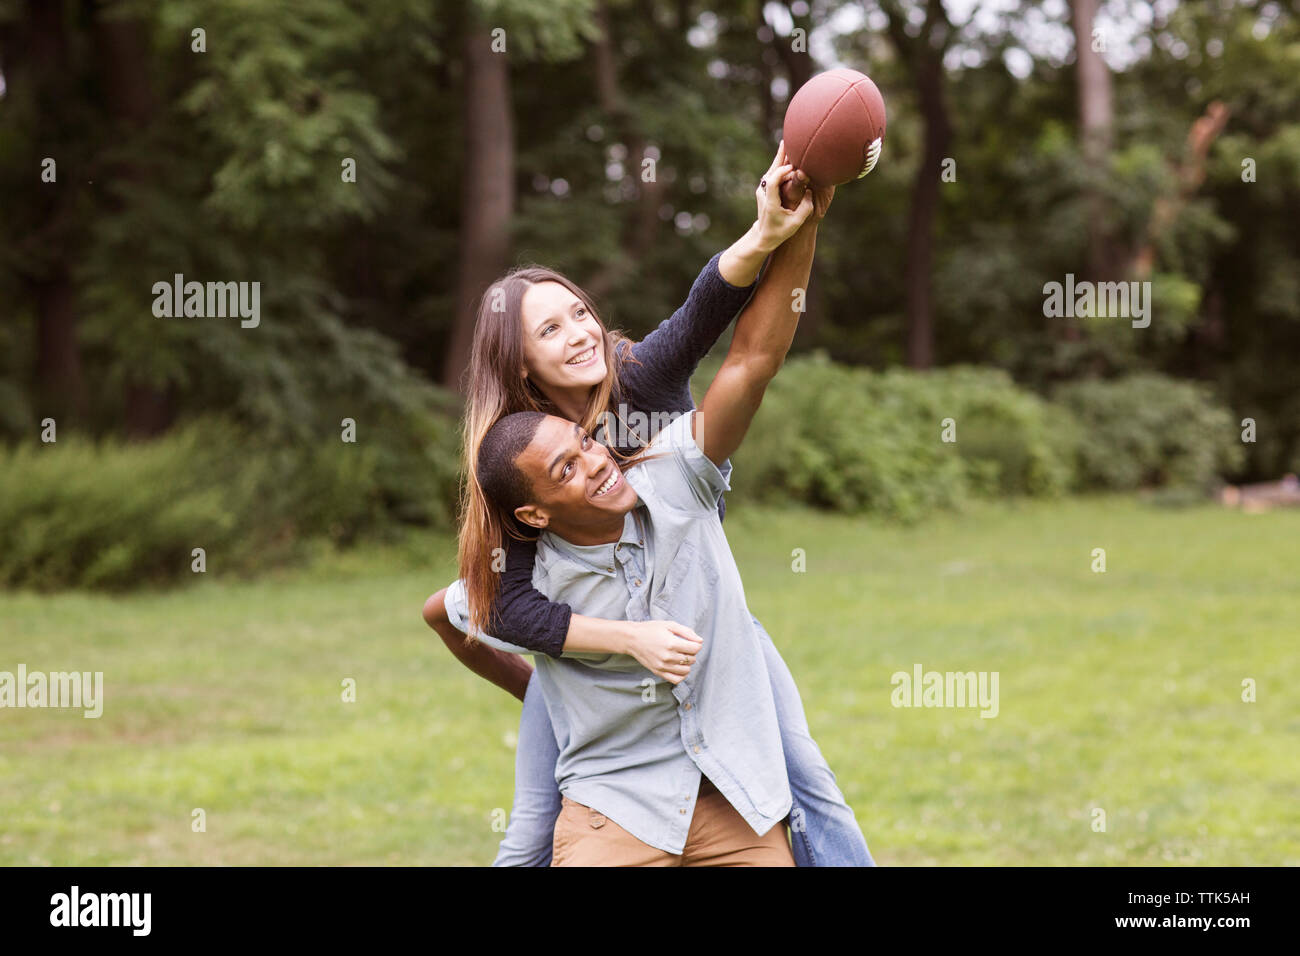 Man piggybacking woman while playing football on field Stock Photo - Alamy